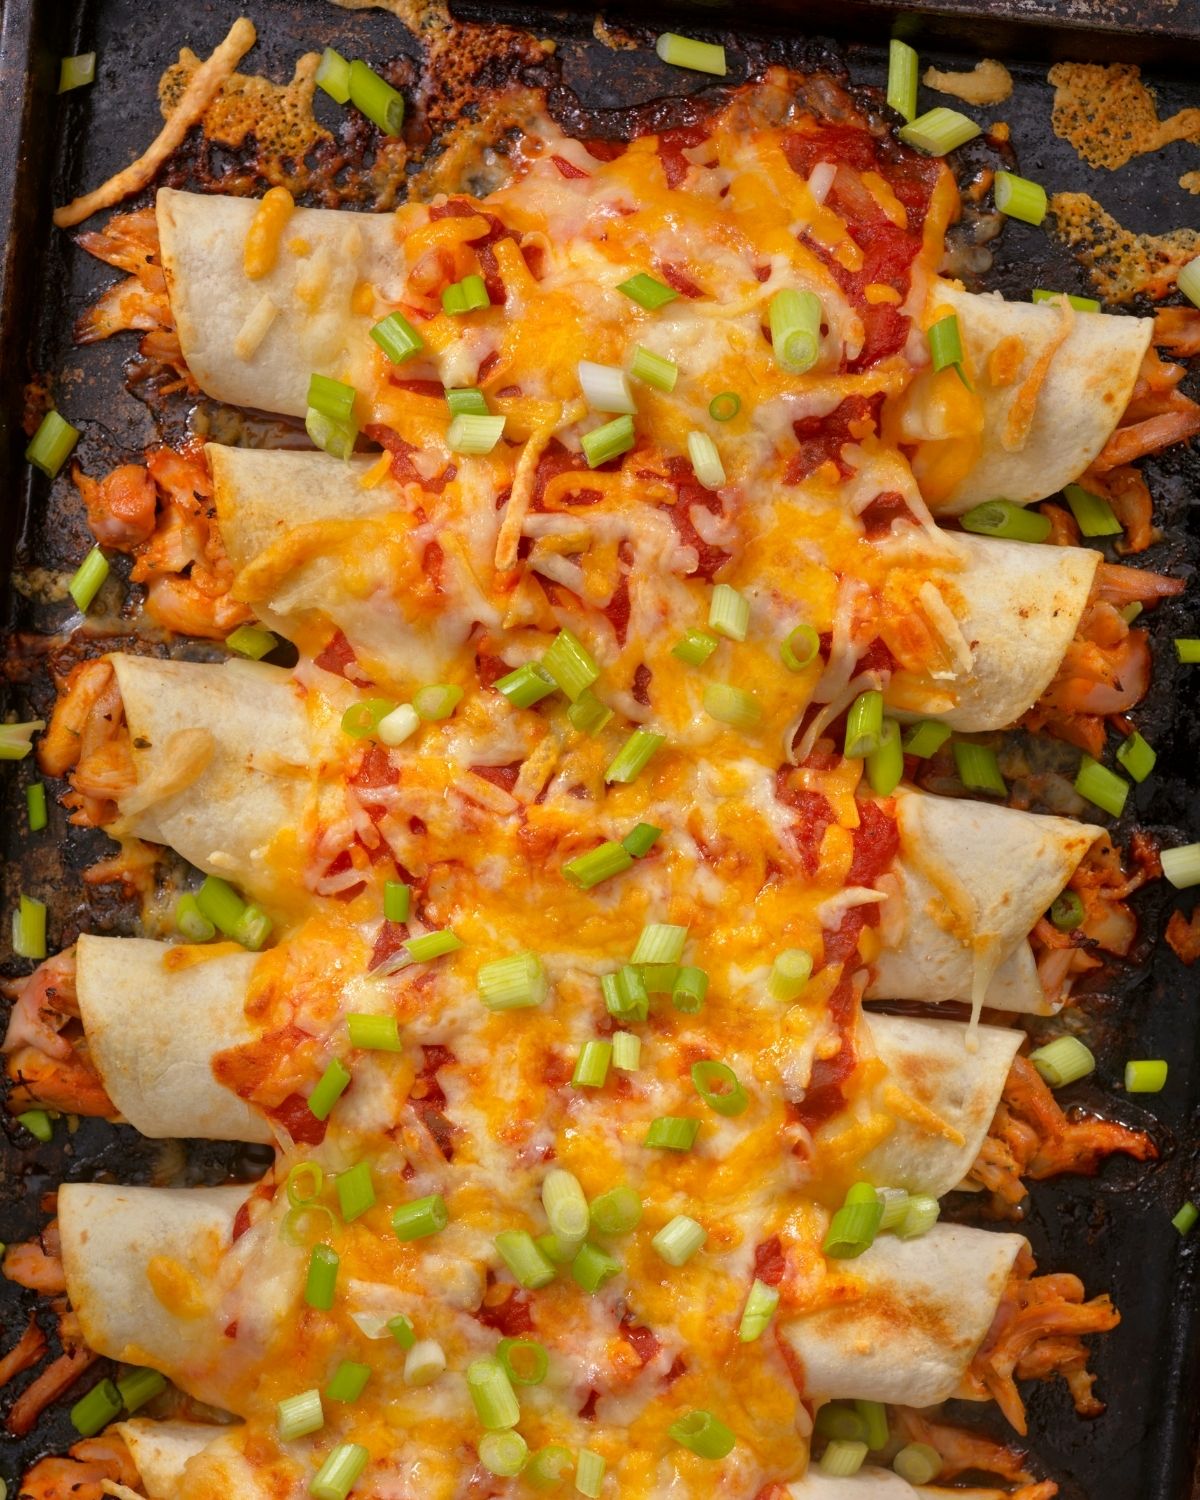 a full tray of chicken enchiladas.